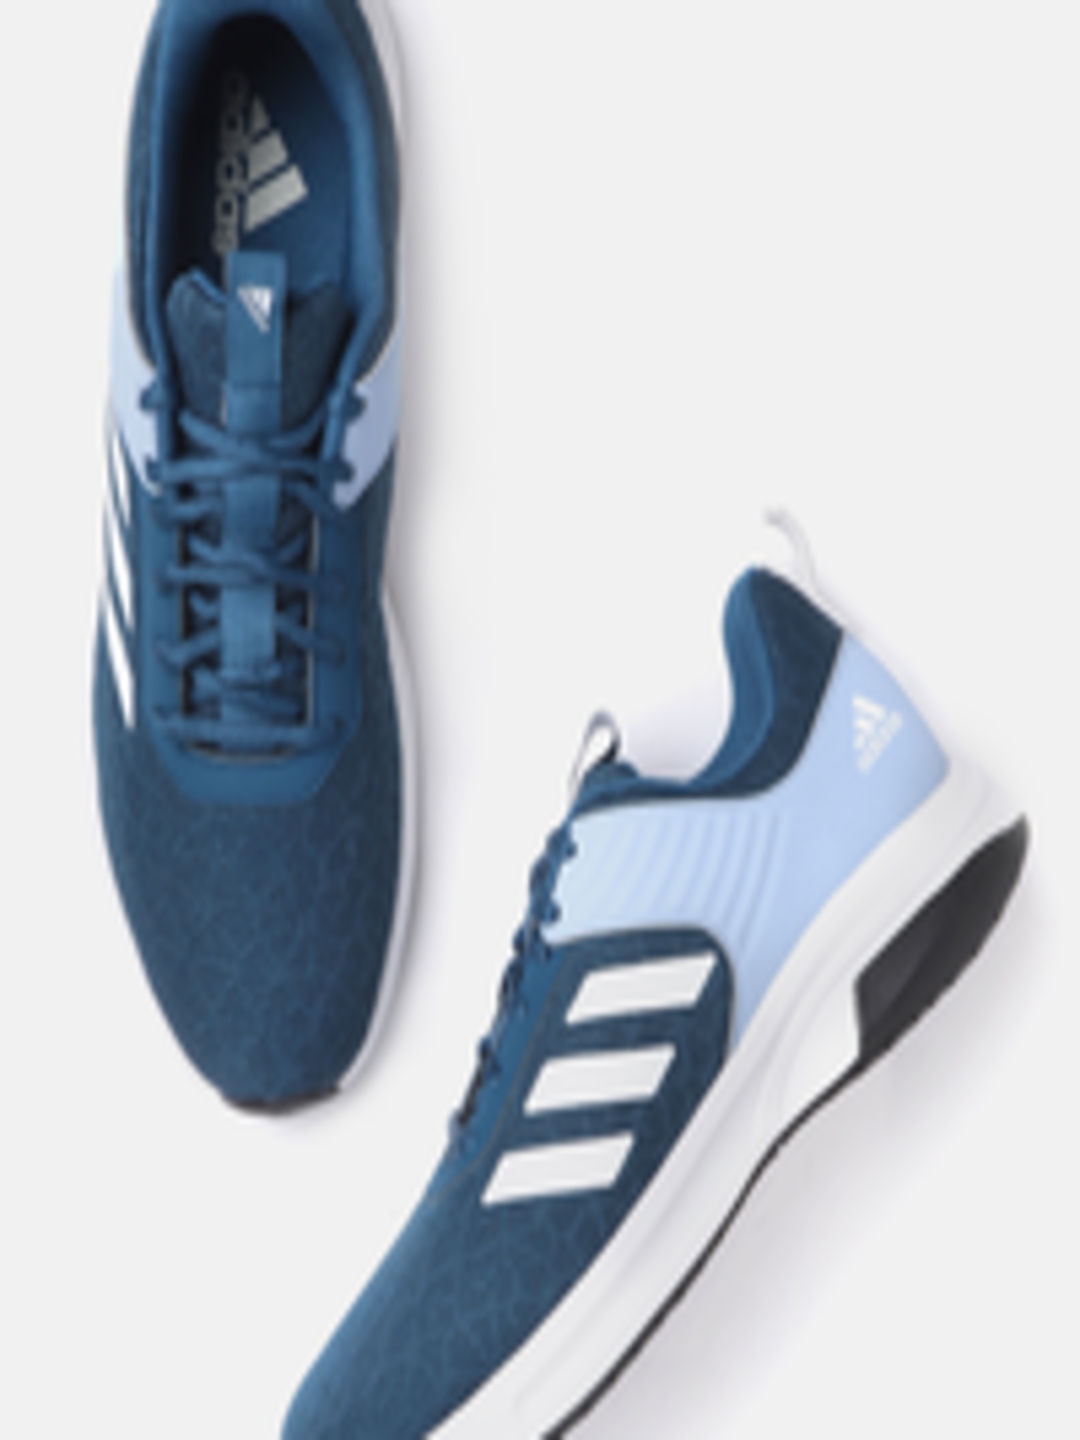 Buy ADIDAS Men Teal Blue & White Woven Design Wind Raiser Running Shoes ...